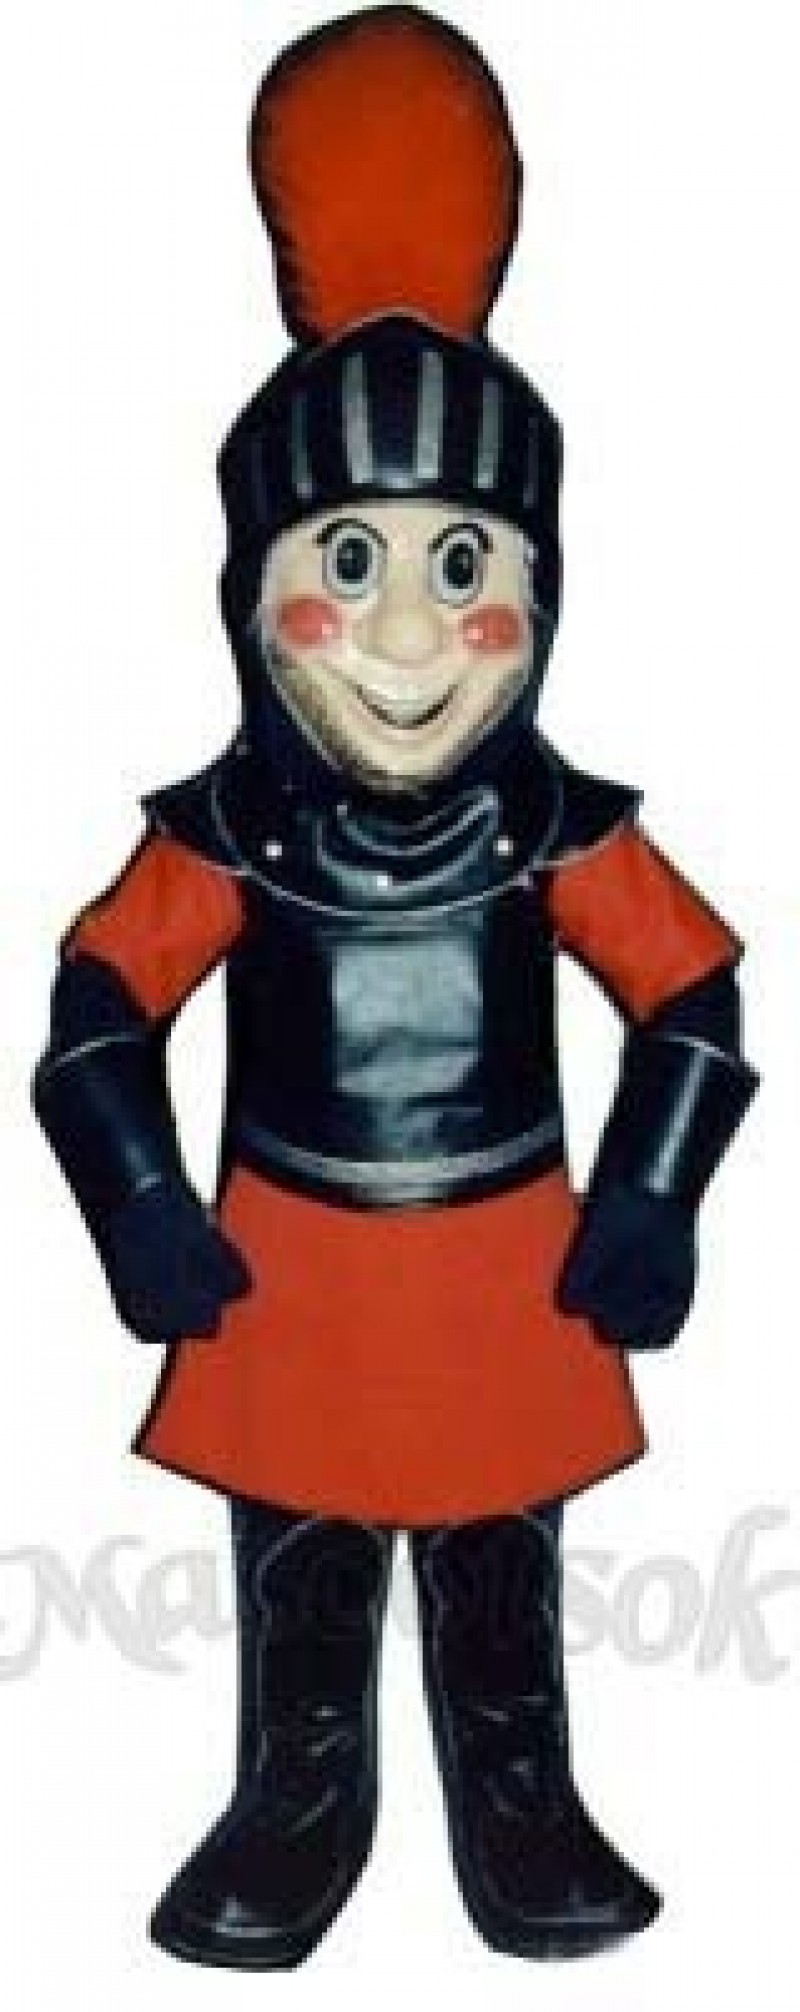 Knight Mascot Costume